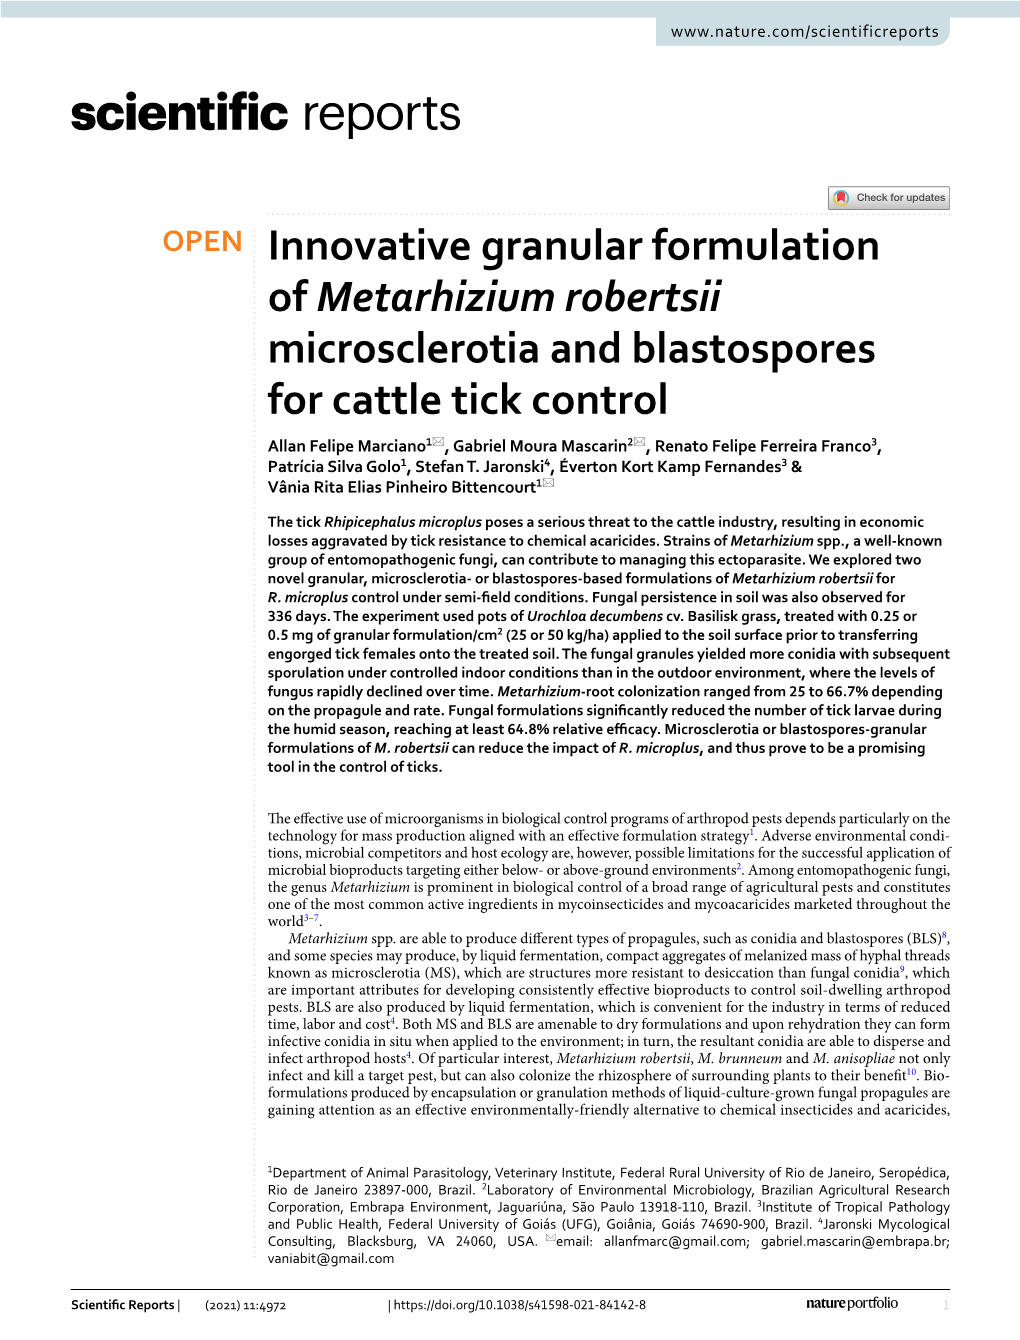 Innovative Granular Formulation of Metarhizium Robertsii Microsclerotia